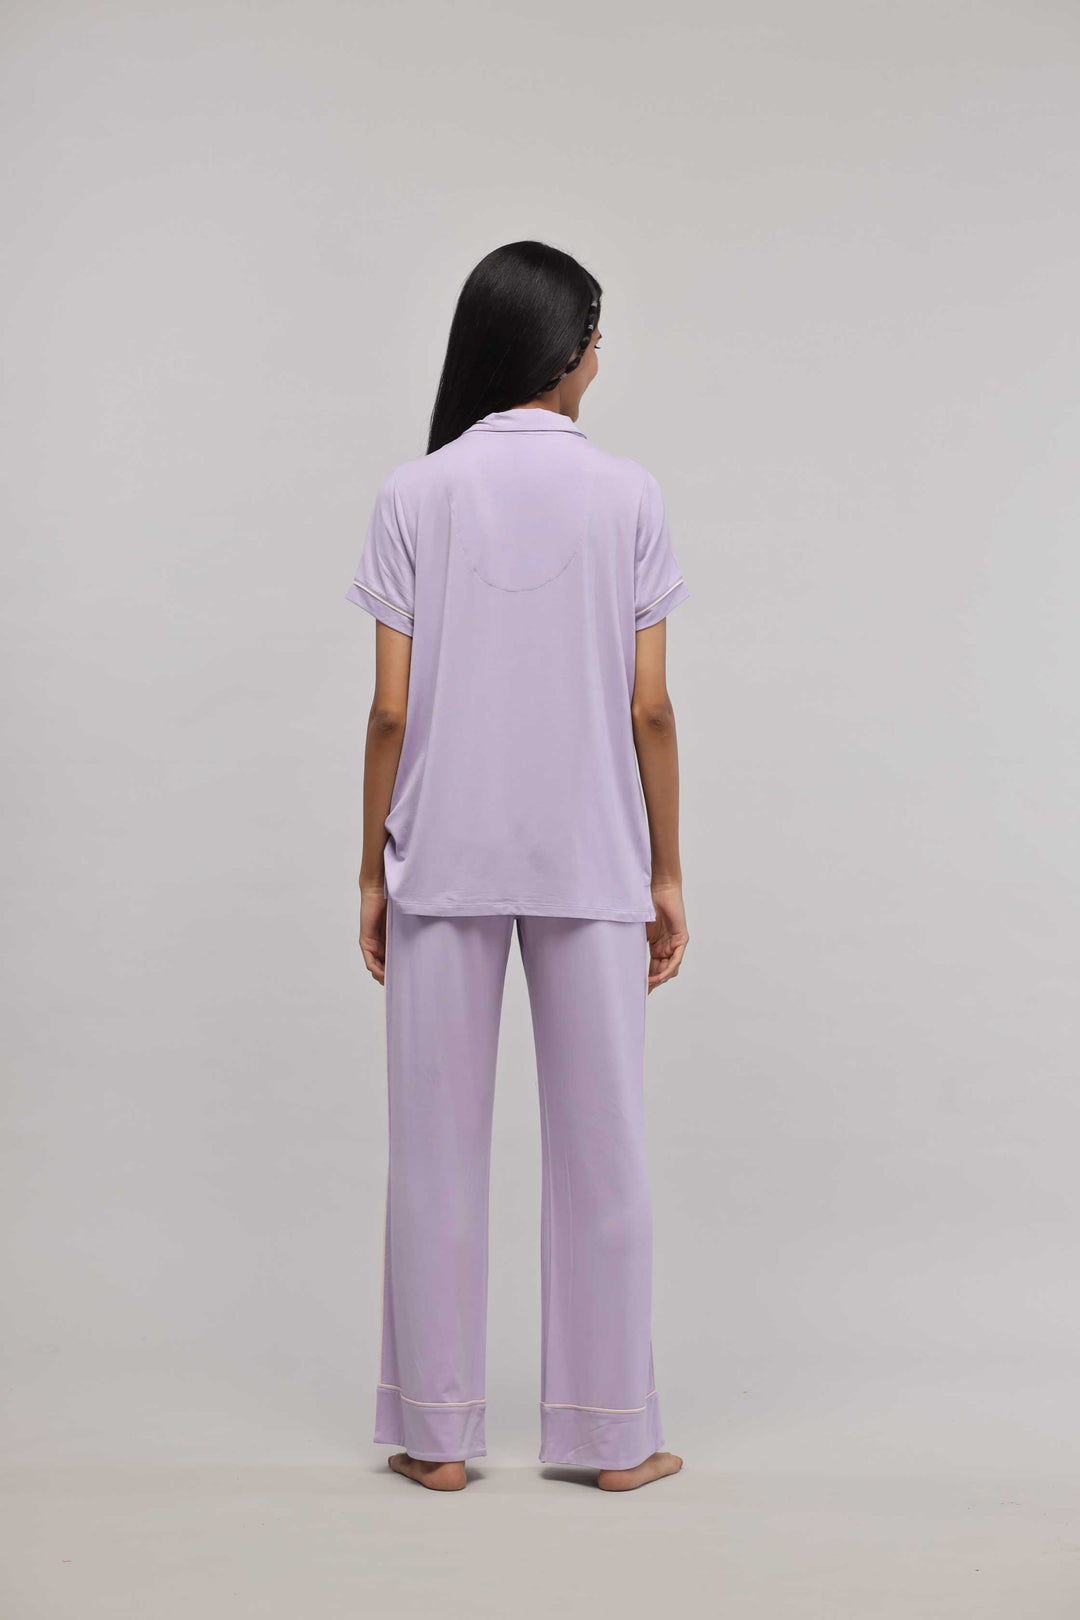 Lavender Piping Pajama Set with Half Sleeve Top